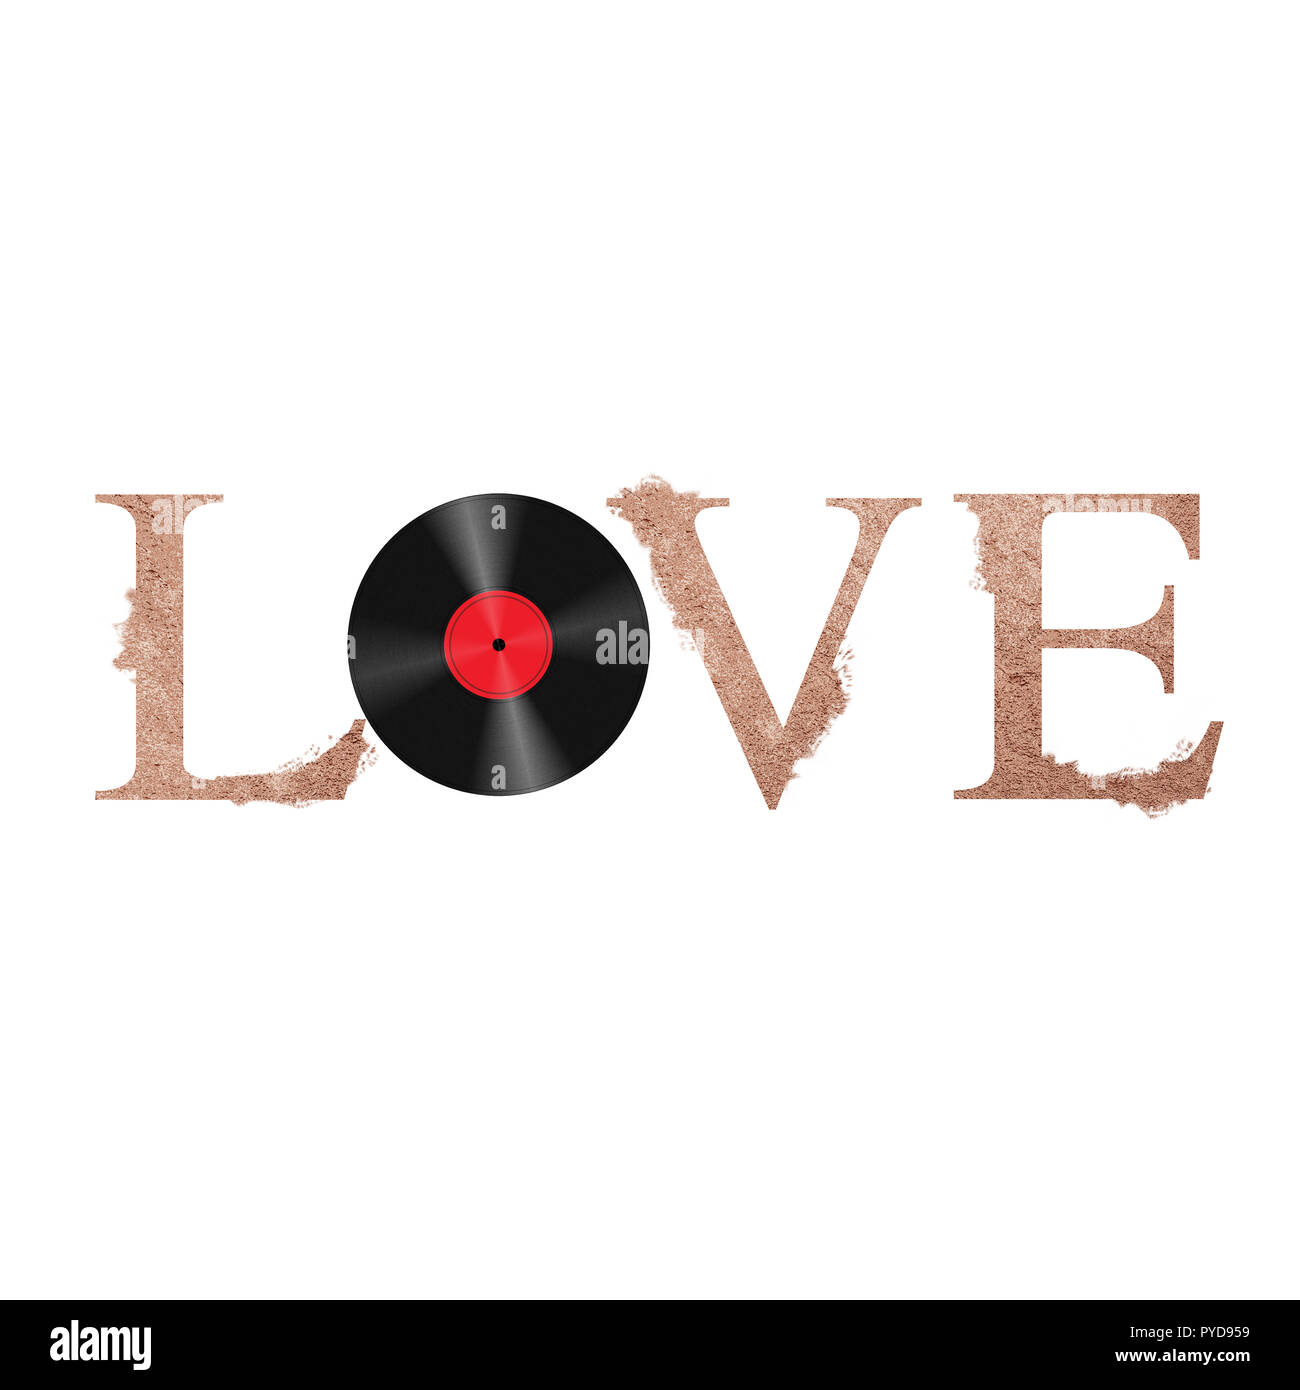 Vintage Vinyl LOVE Poster by Adam Asar.jpg - PYD959 Stock Photo